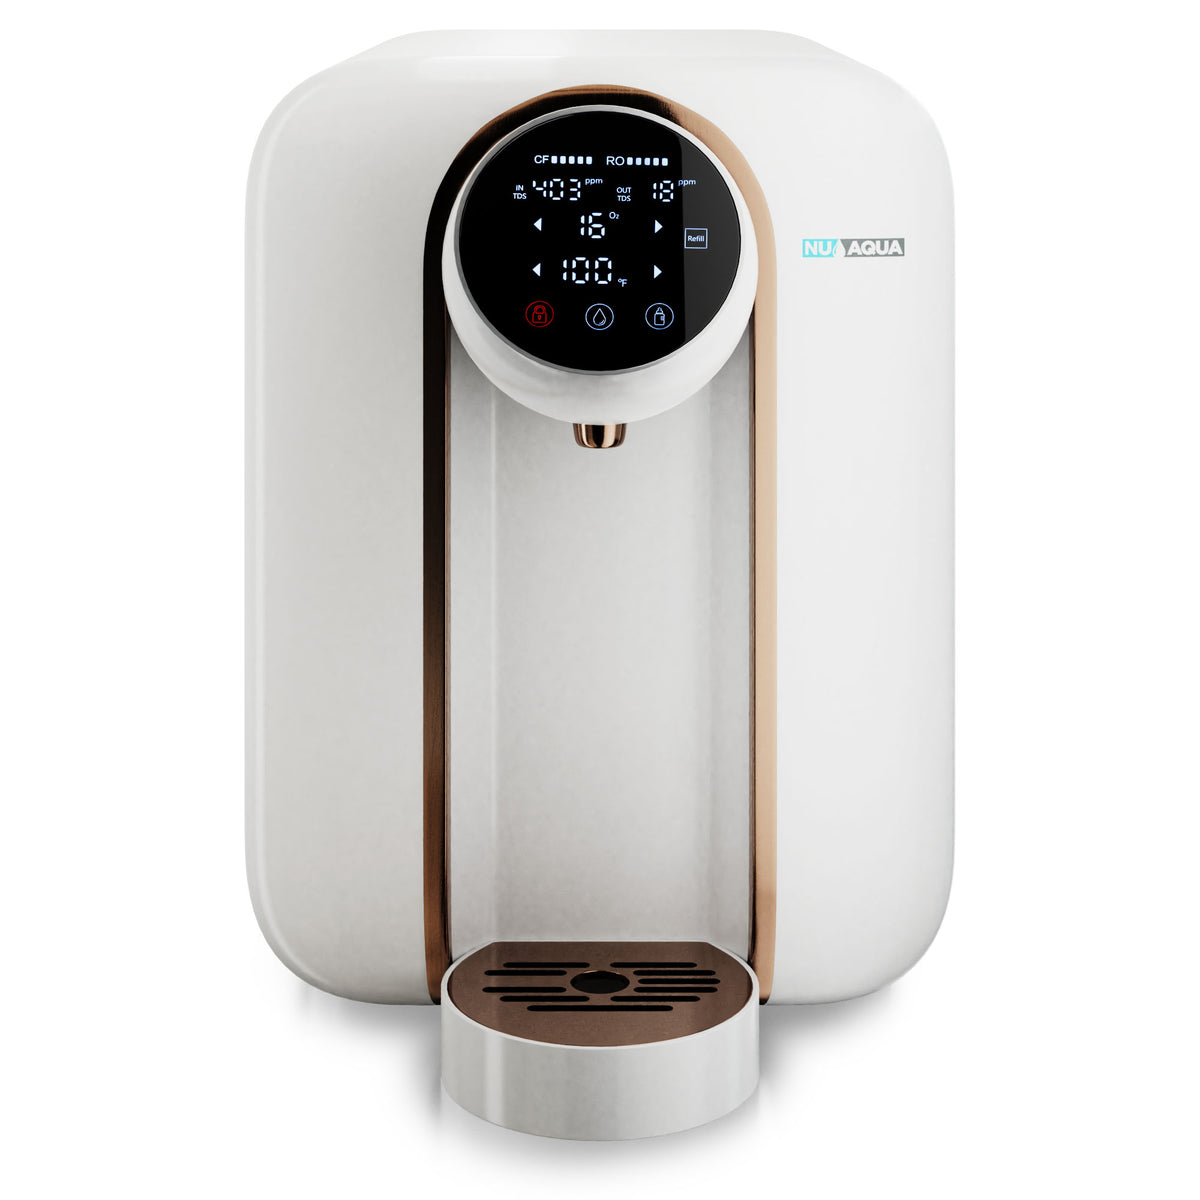 Efficient Japanese Hot Water Dispenser on Sale 